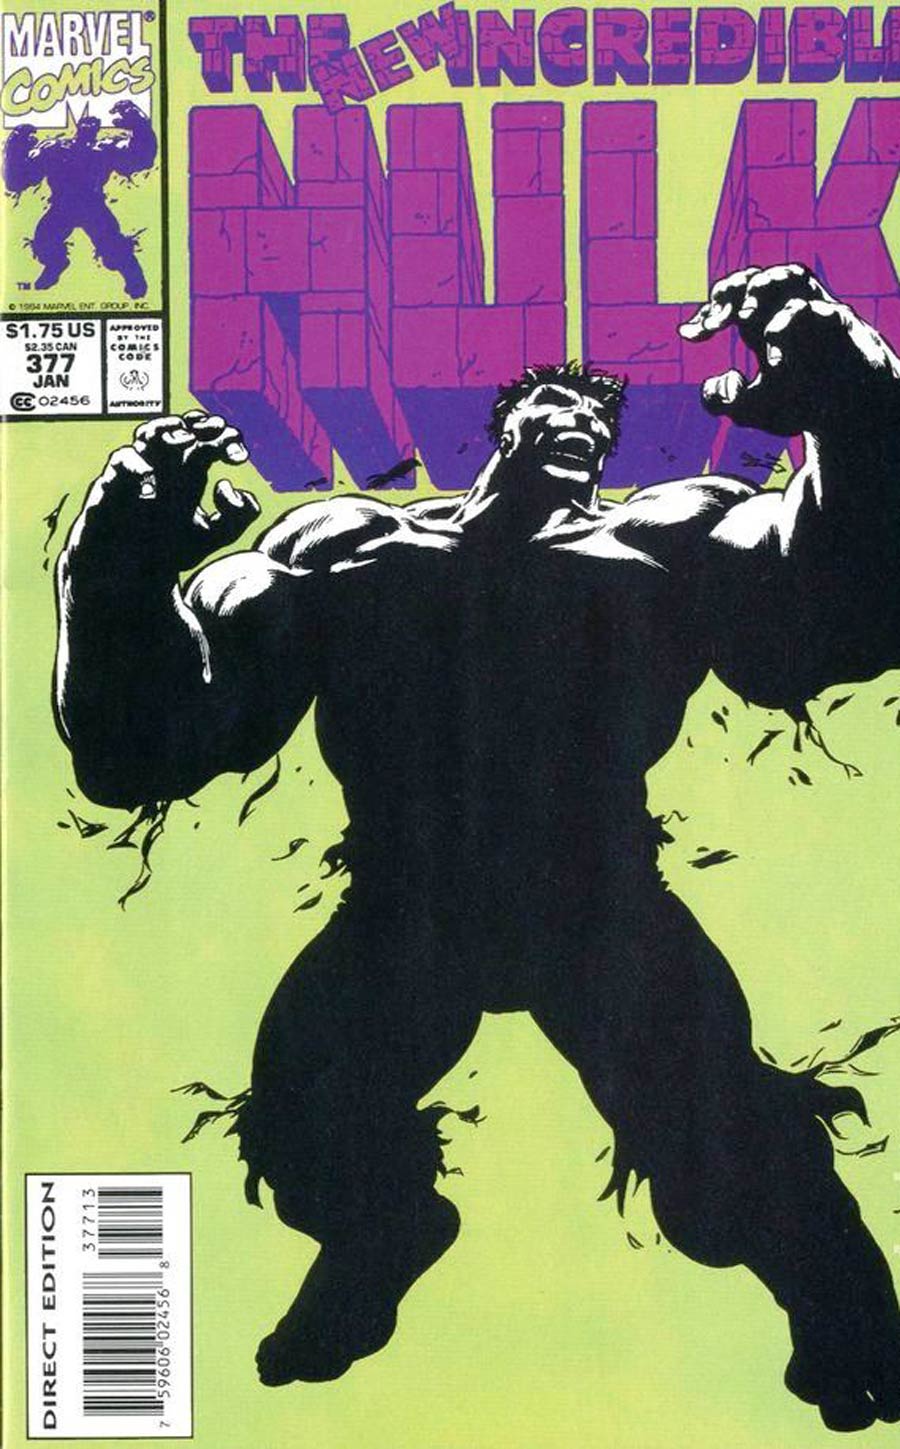 Incredible Hulk #377 Cover C 3rd Ptg